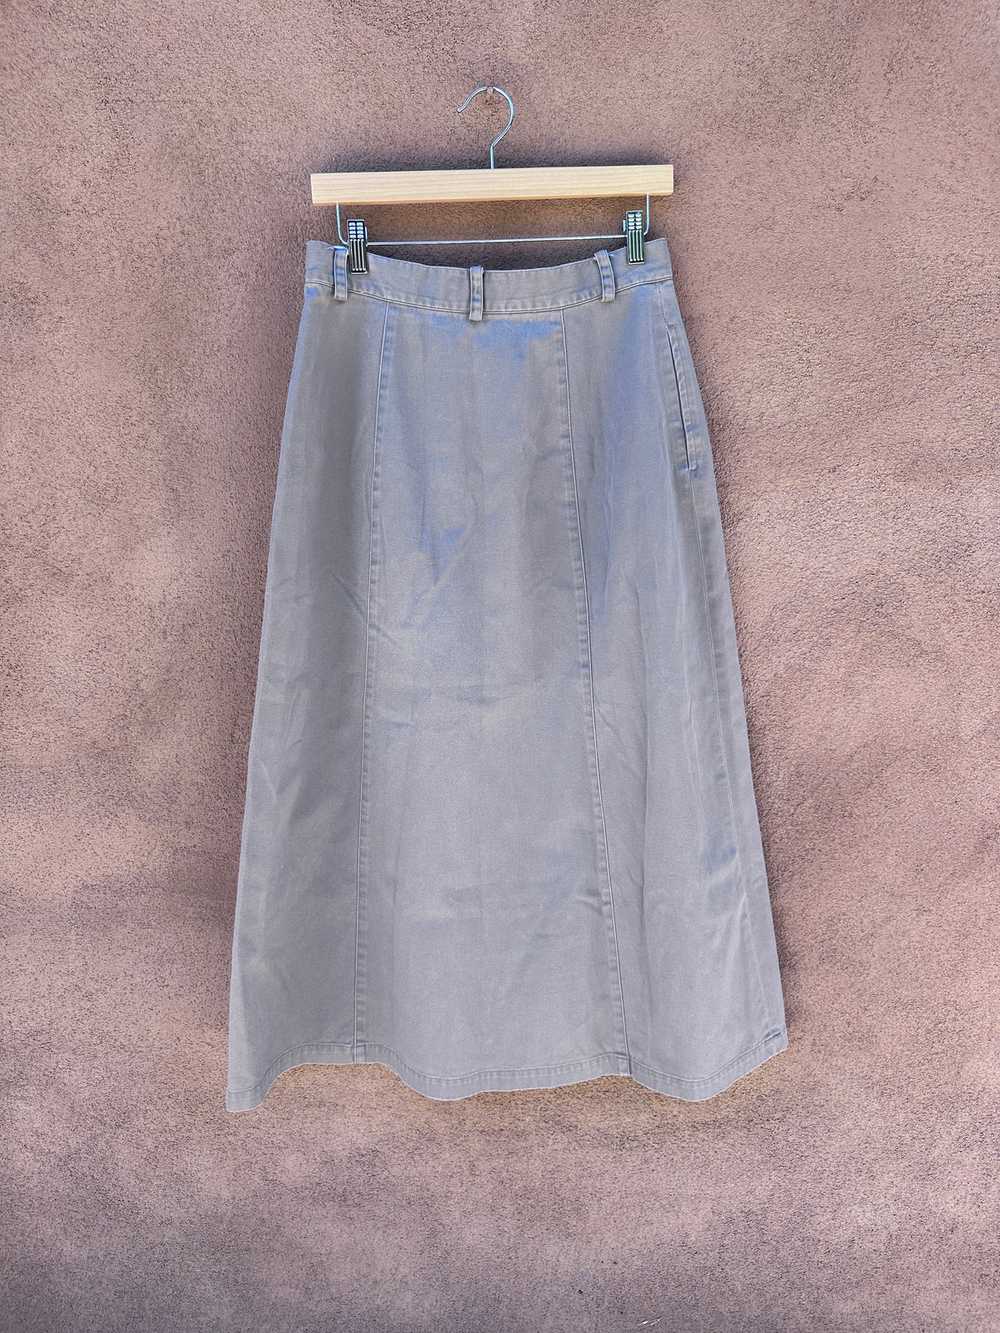 Ralph Lauren Country Tan Cotton Skirt - image 3